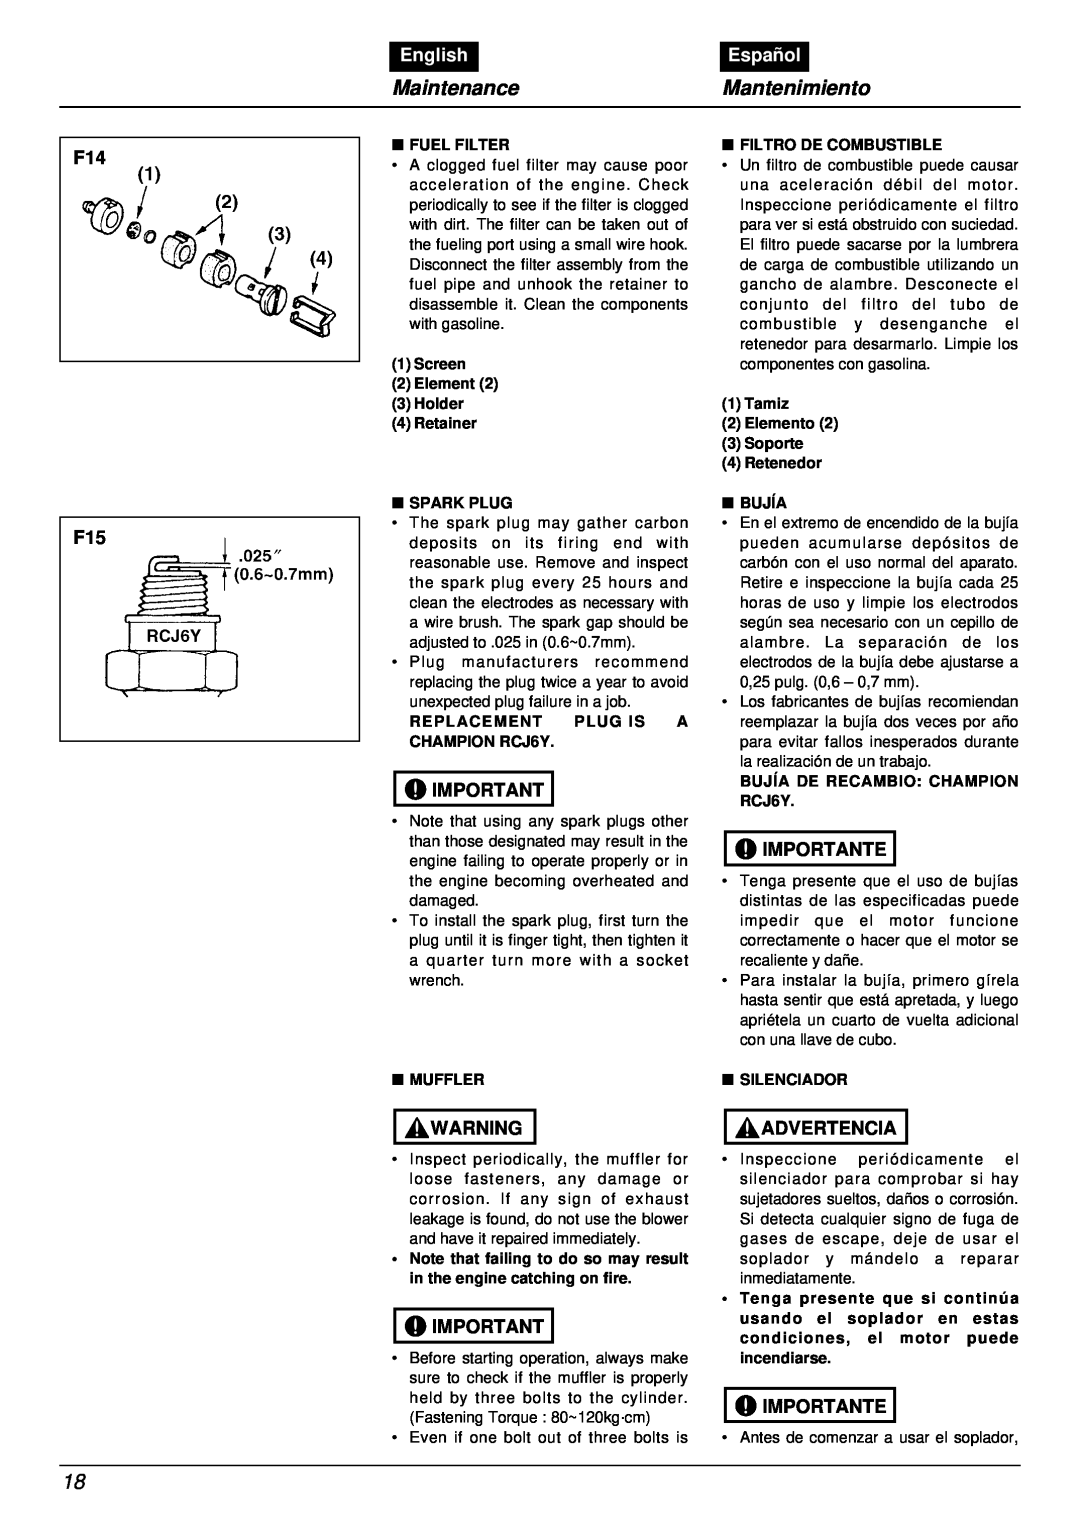 RedMax EB7001RH manual MaintenanceMantenimiento, F14 F15, English, Español, Importante, Advertencia 